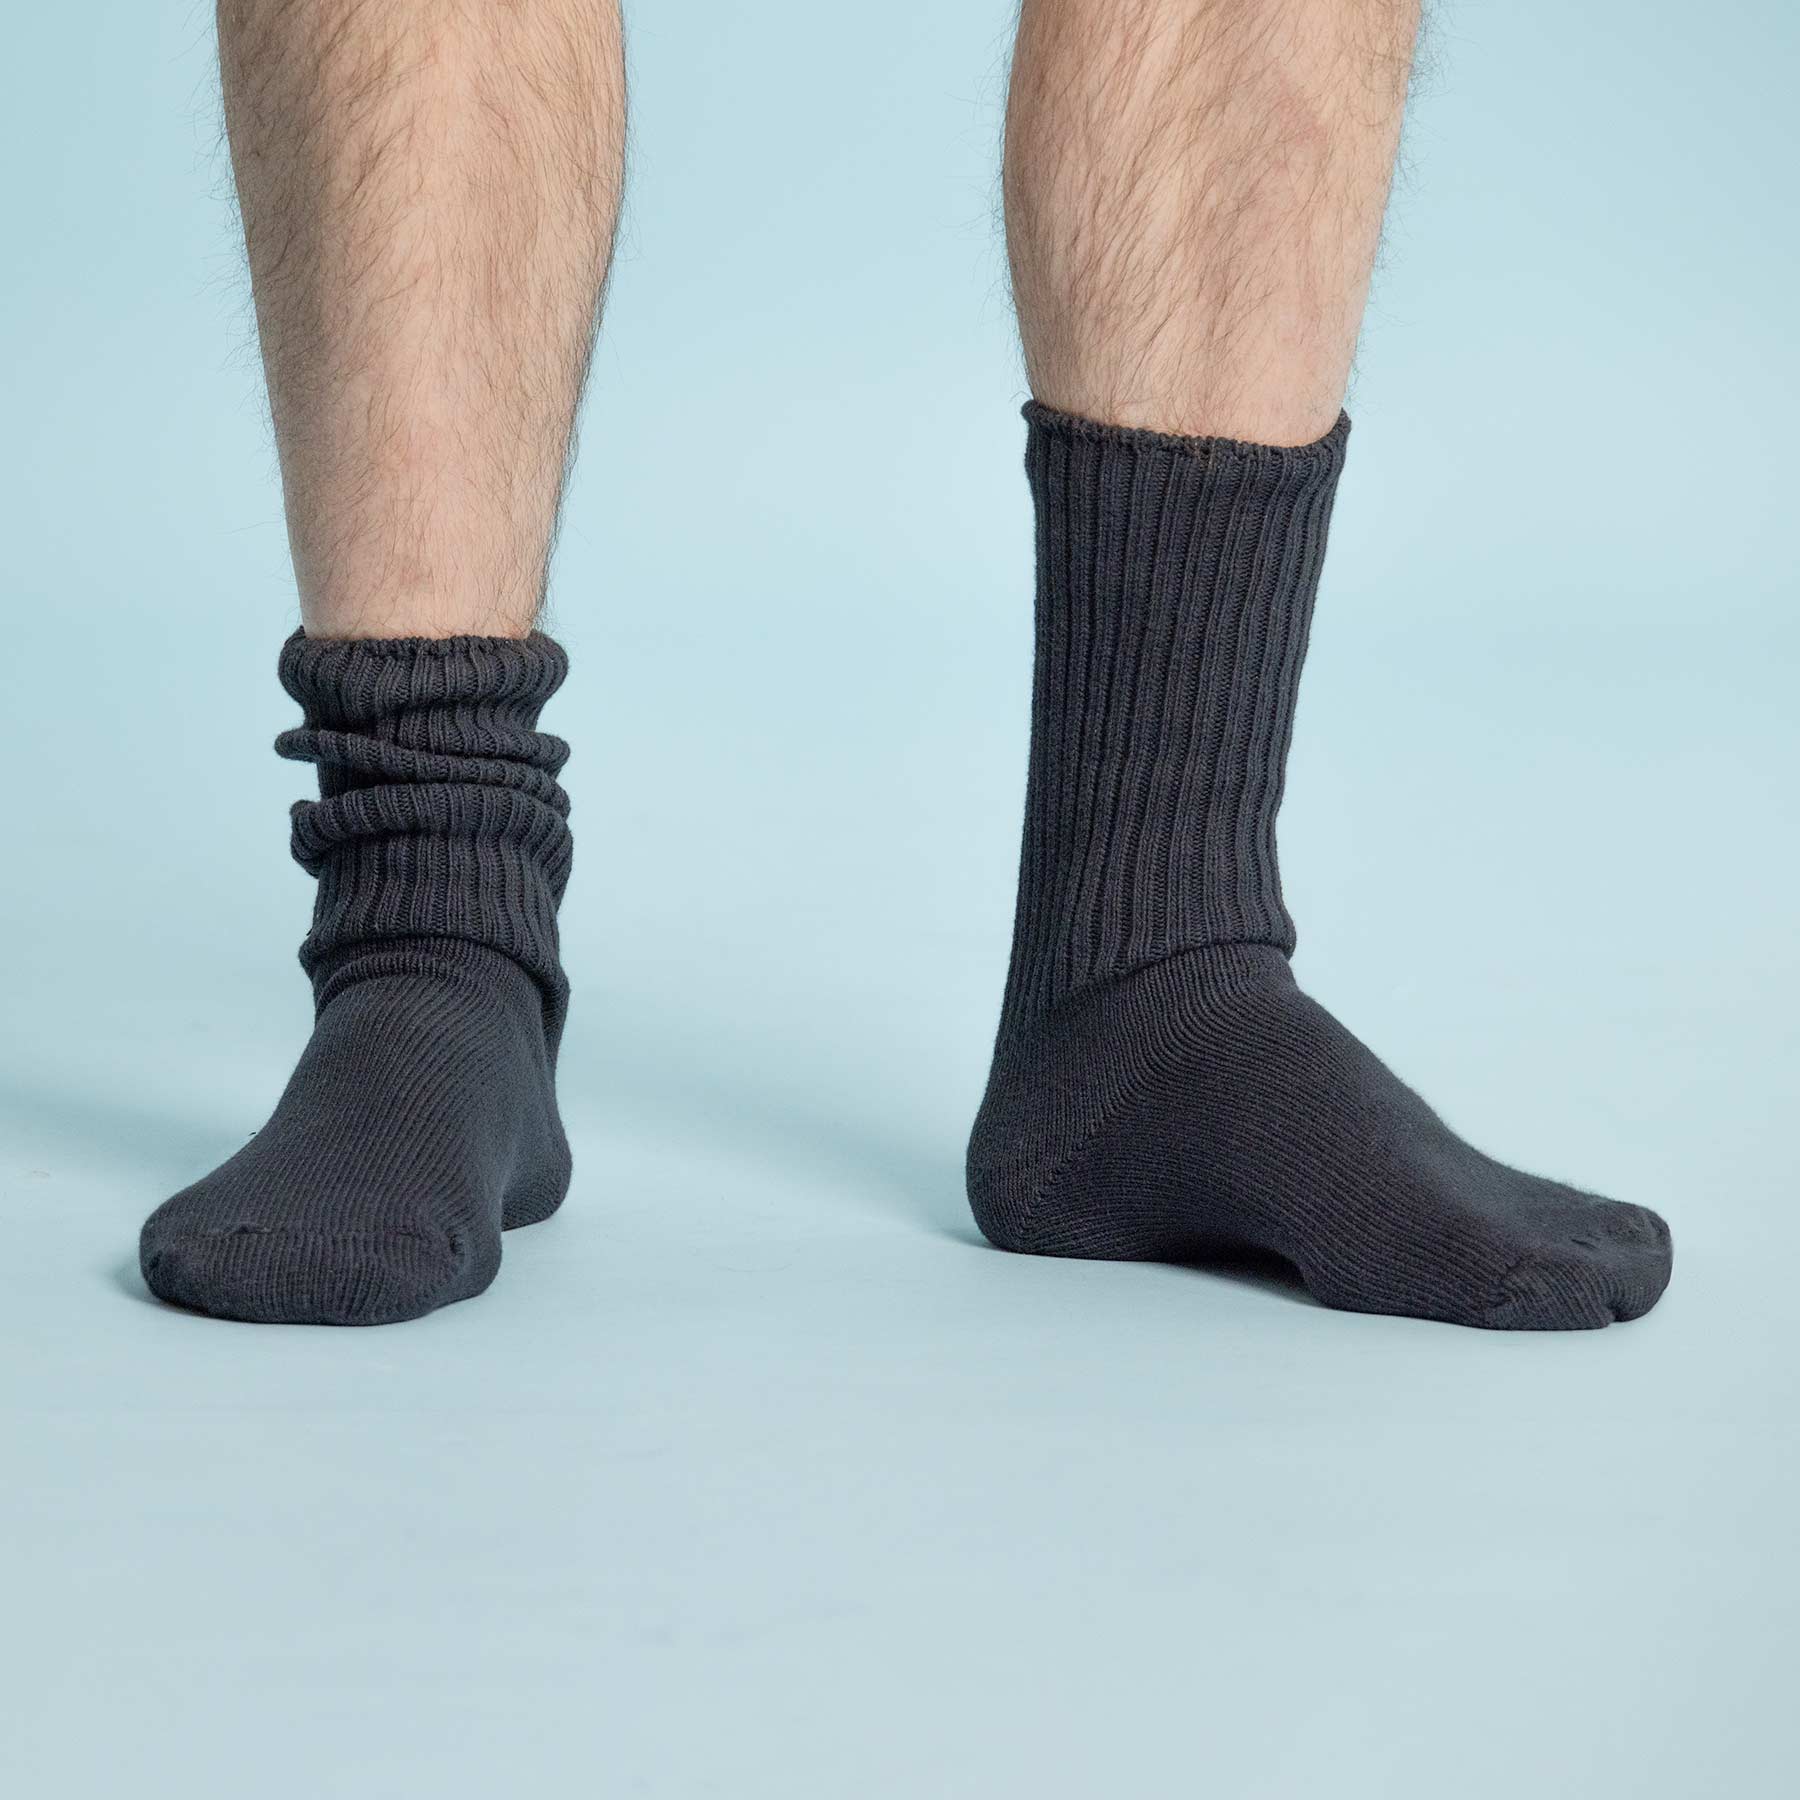 Allergy Crew 99.8% Organic Cotton Socks (Breathable & Non